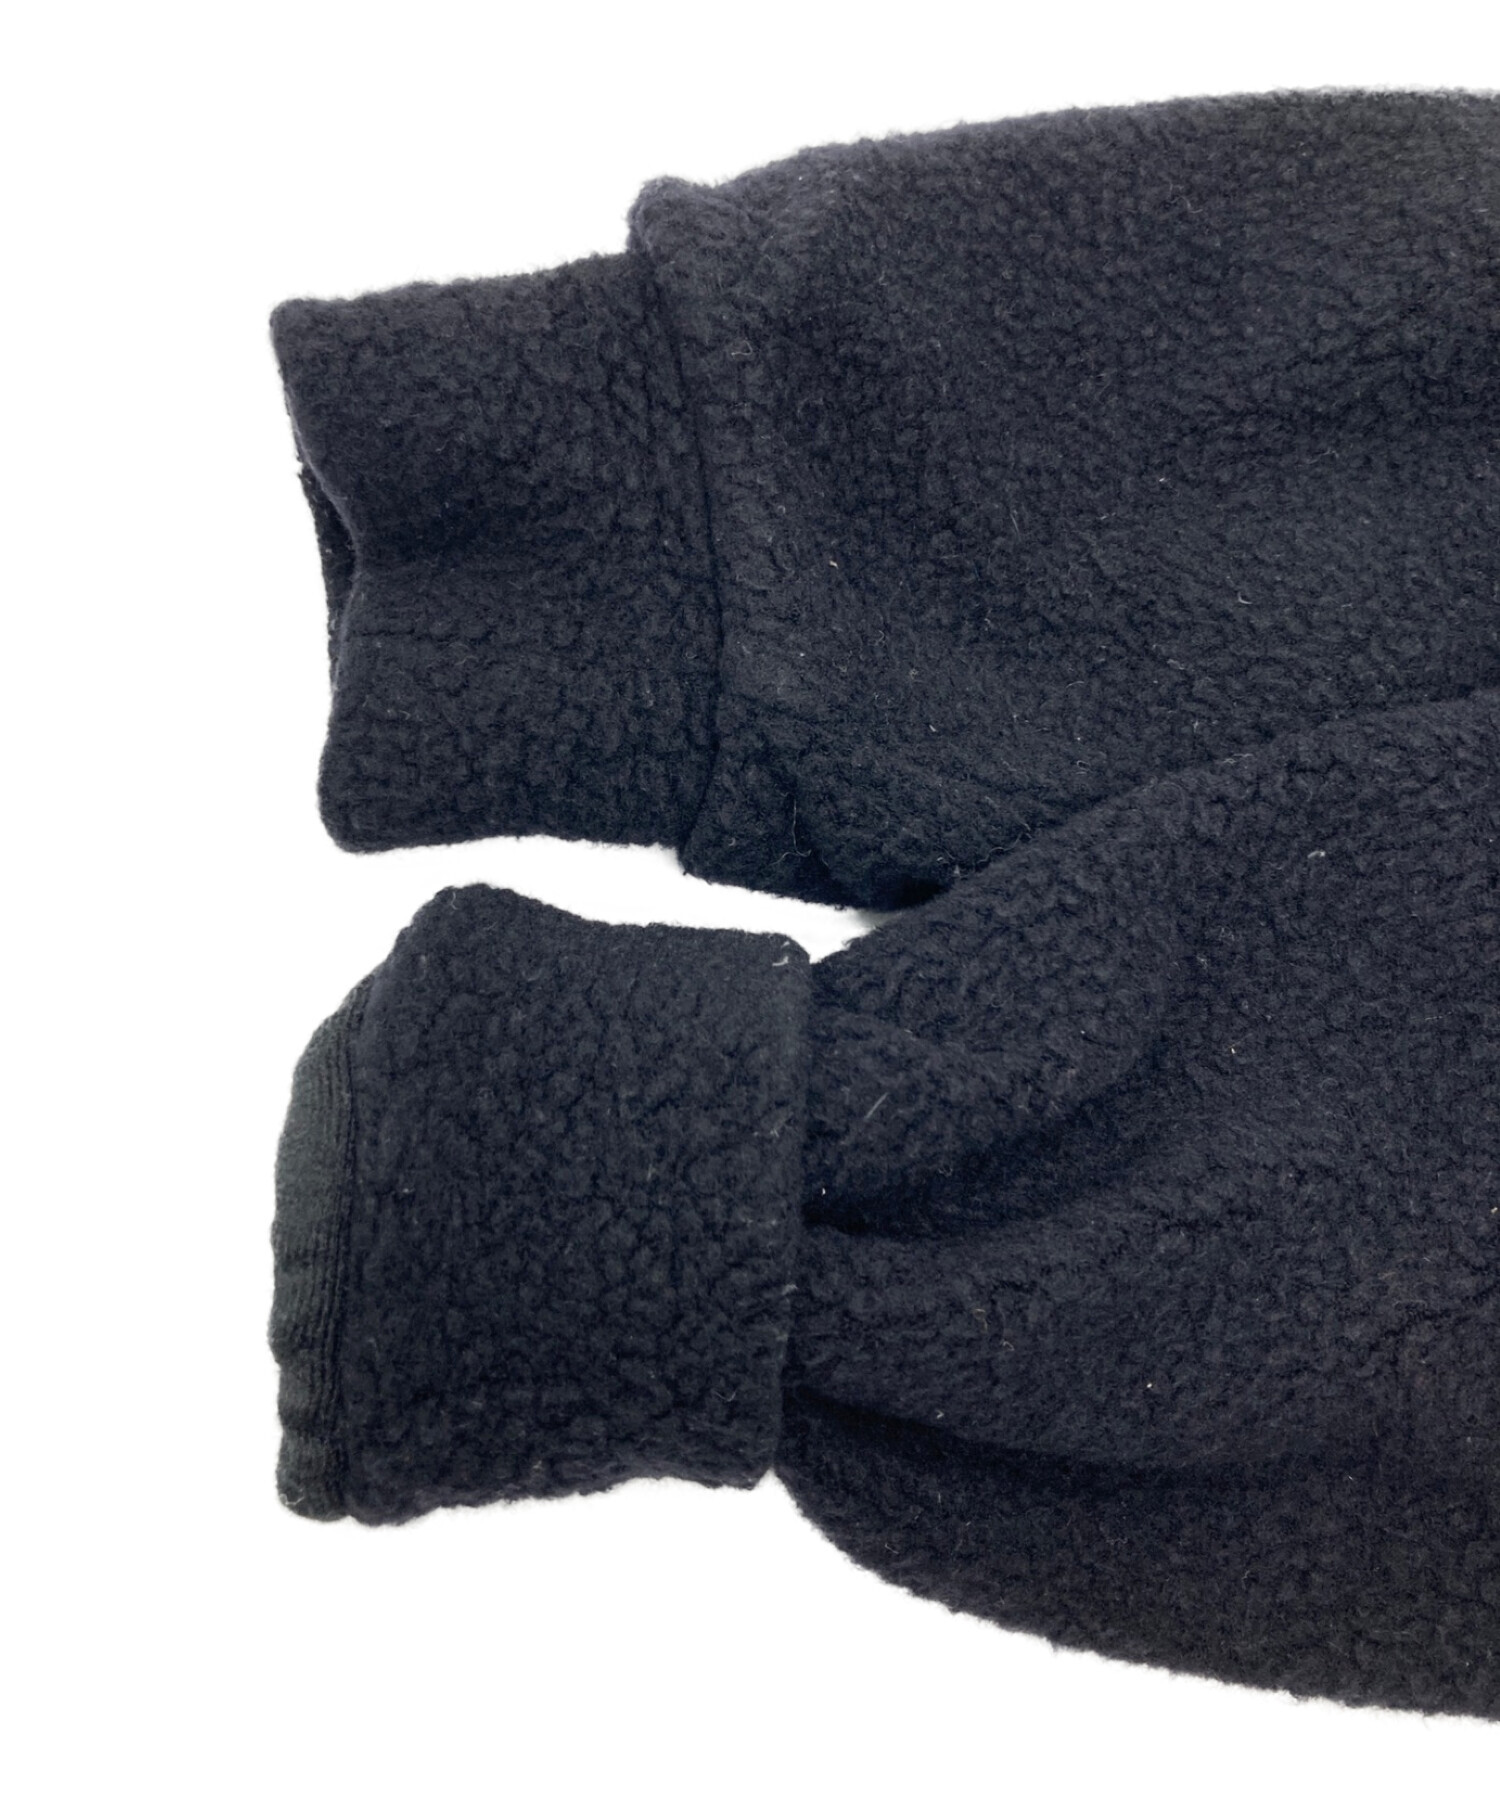 COMOLI (コモリ) ウールフリースジップアップジャケット ブラック サイズ:3